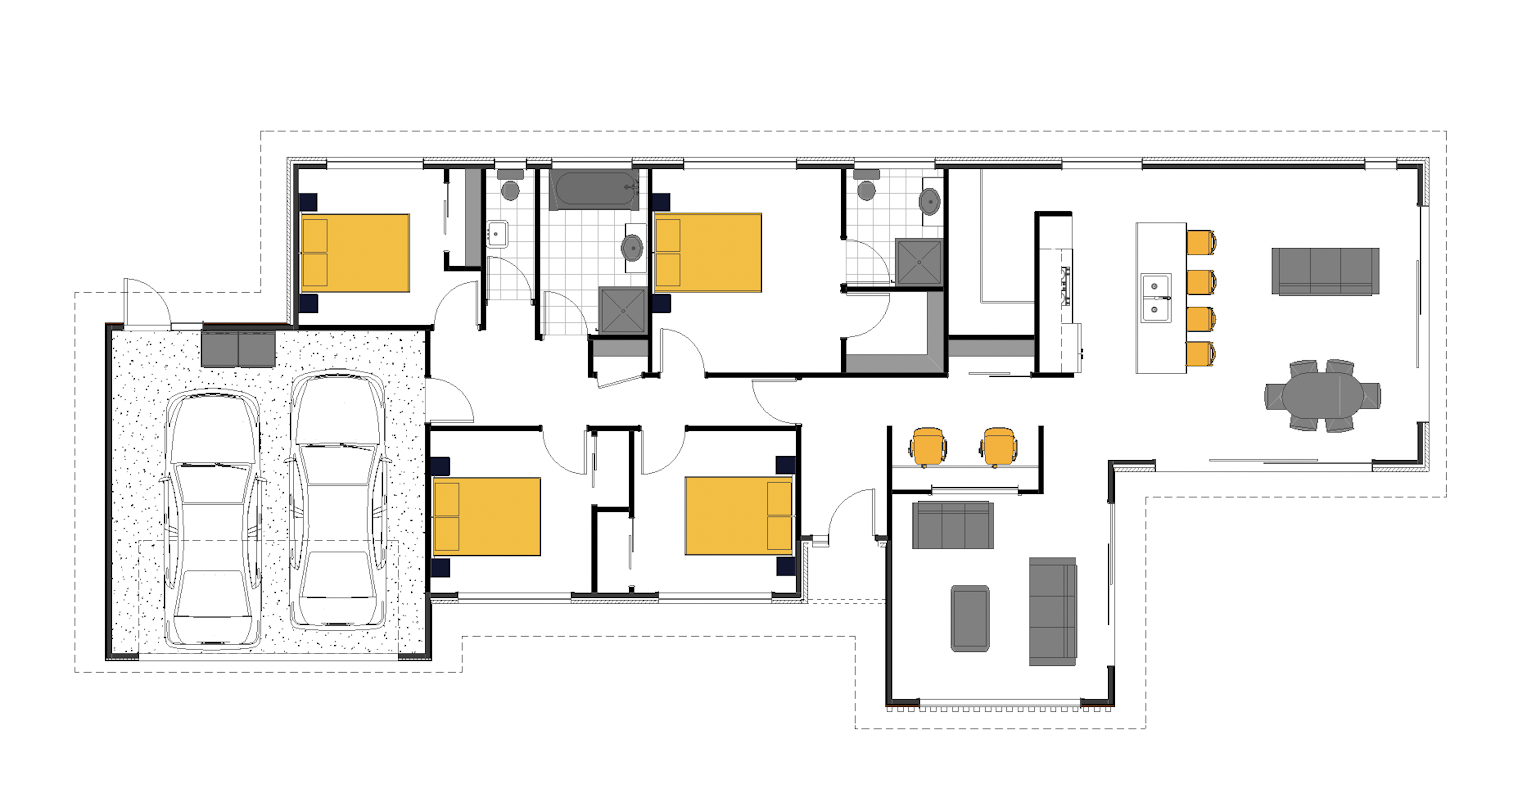 McLarin Rd Show Home floor plan